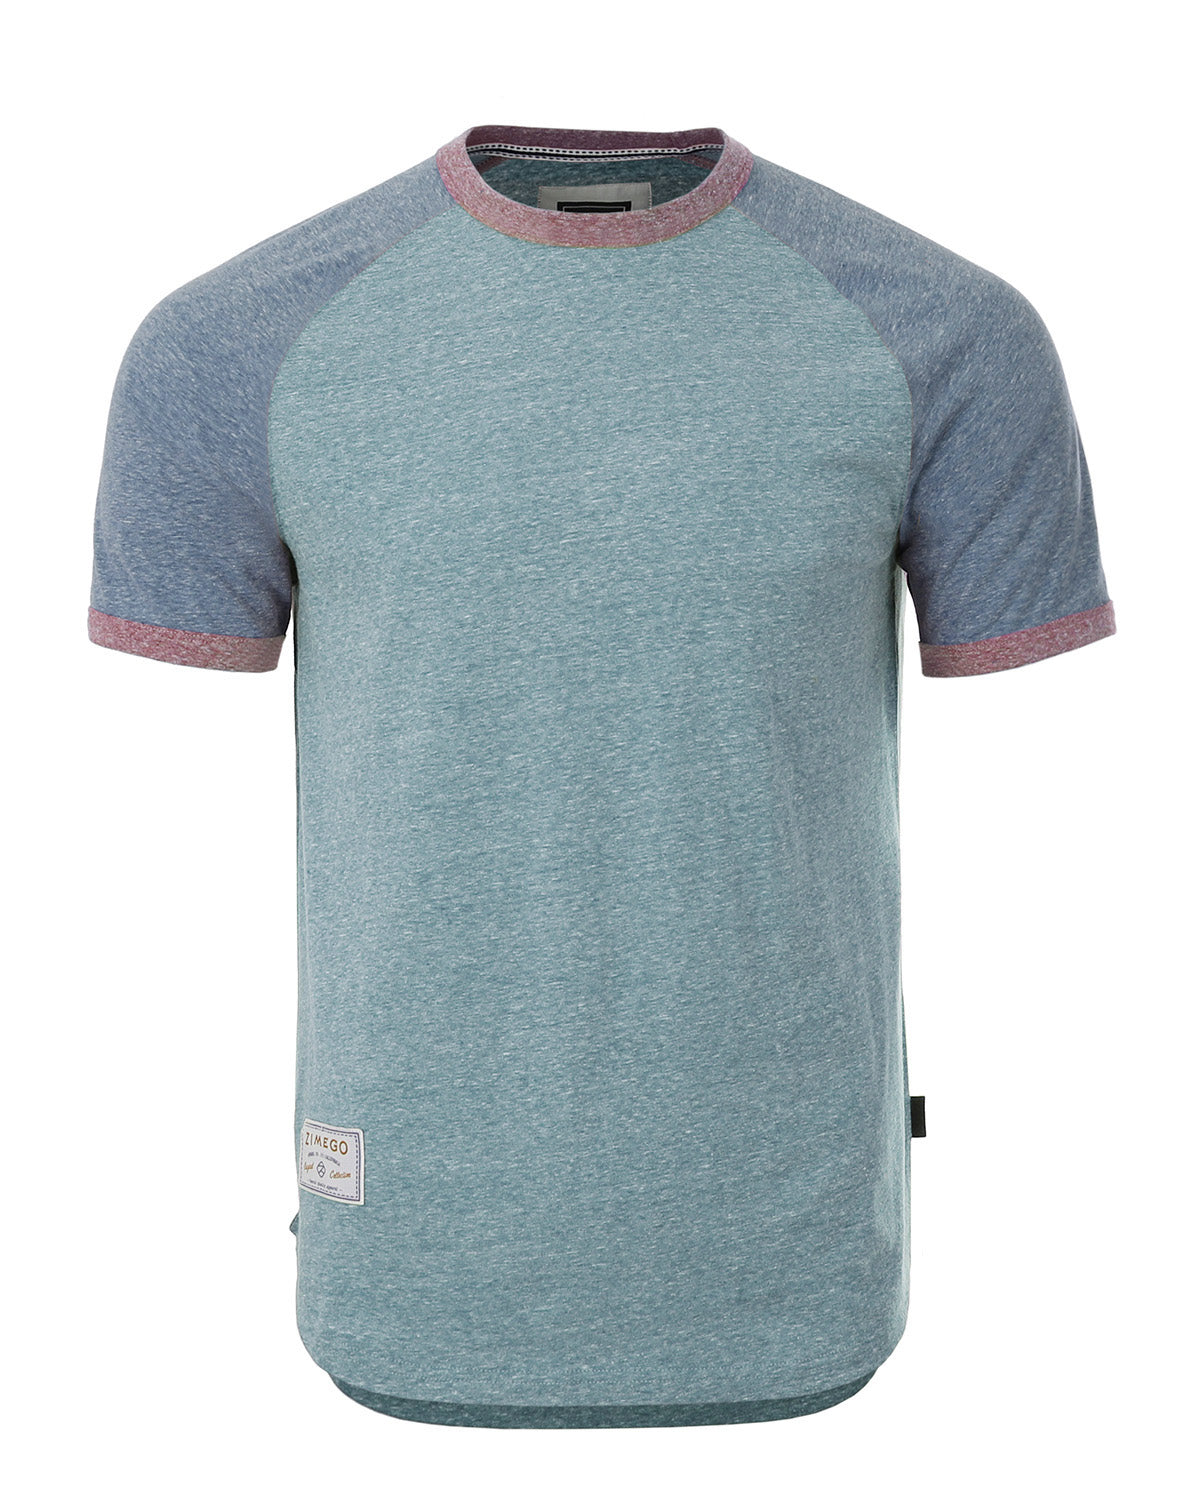 TEEK - Mens Short Sleeve Classic Retro Contrast Ringer T-Shirt TOPS theteekdotcom Large  